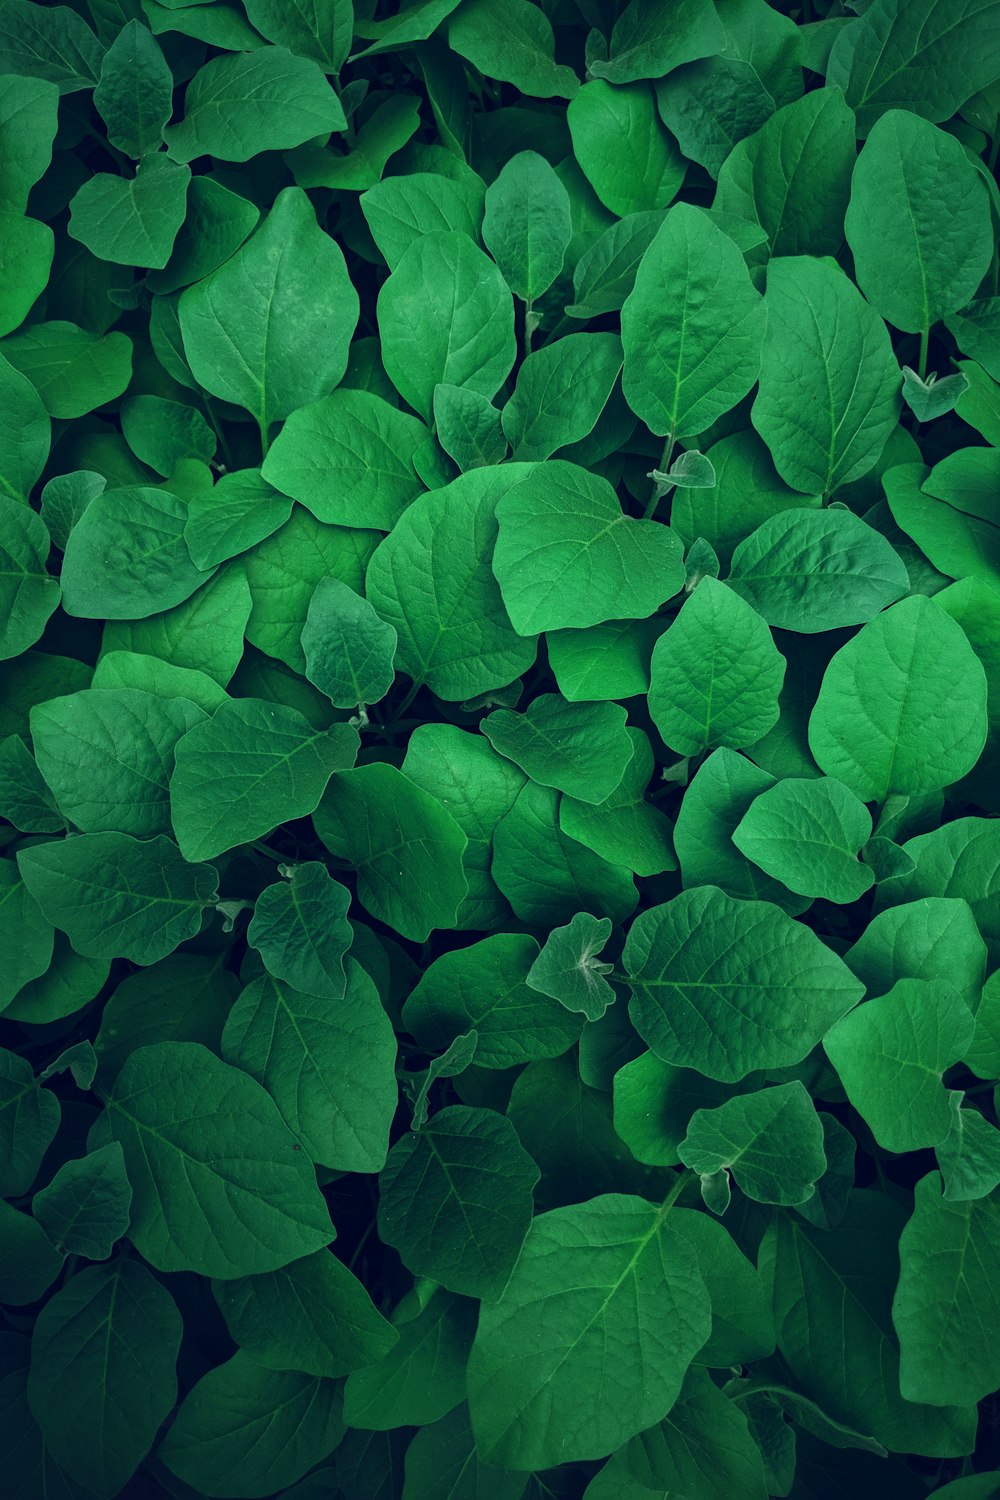 fotografia de folhas verdes